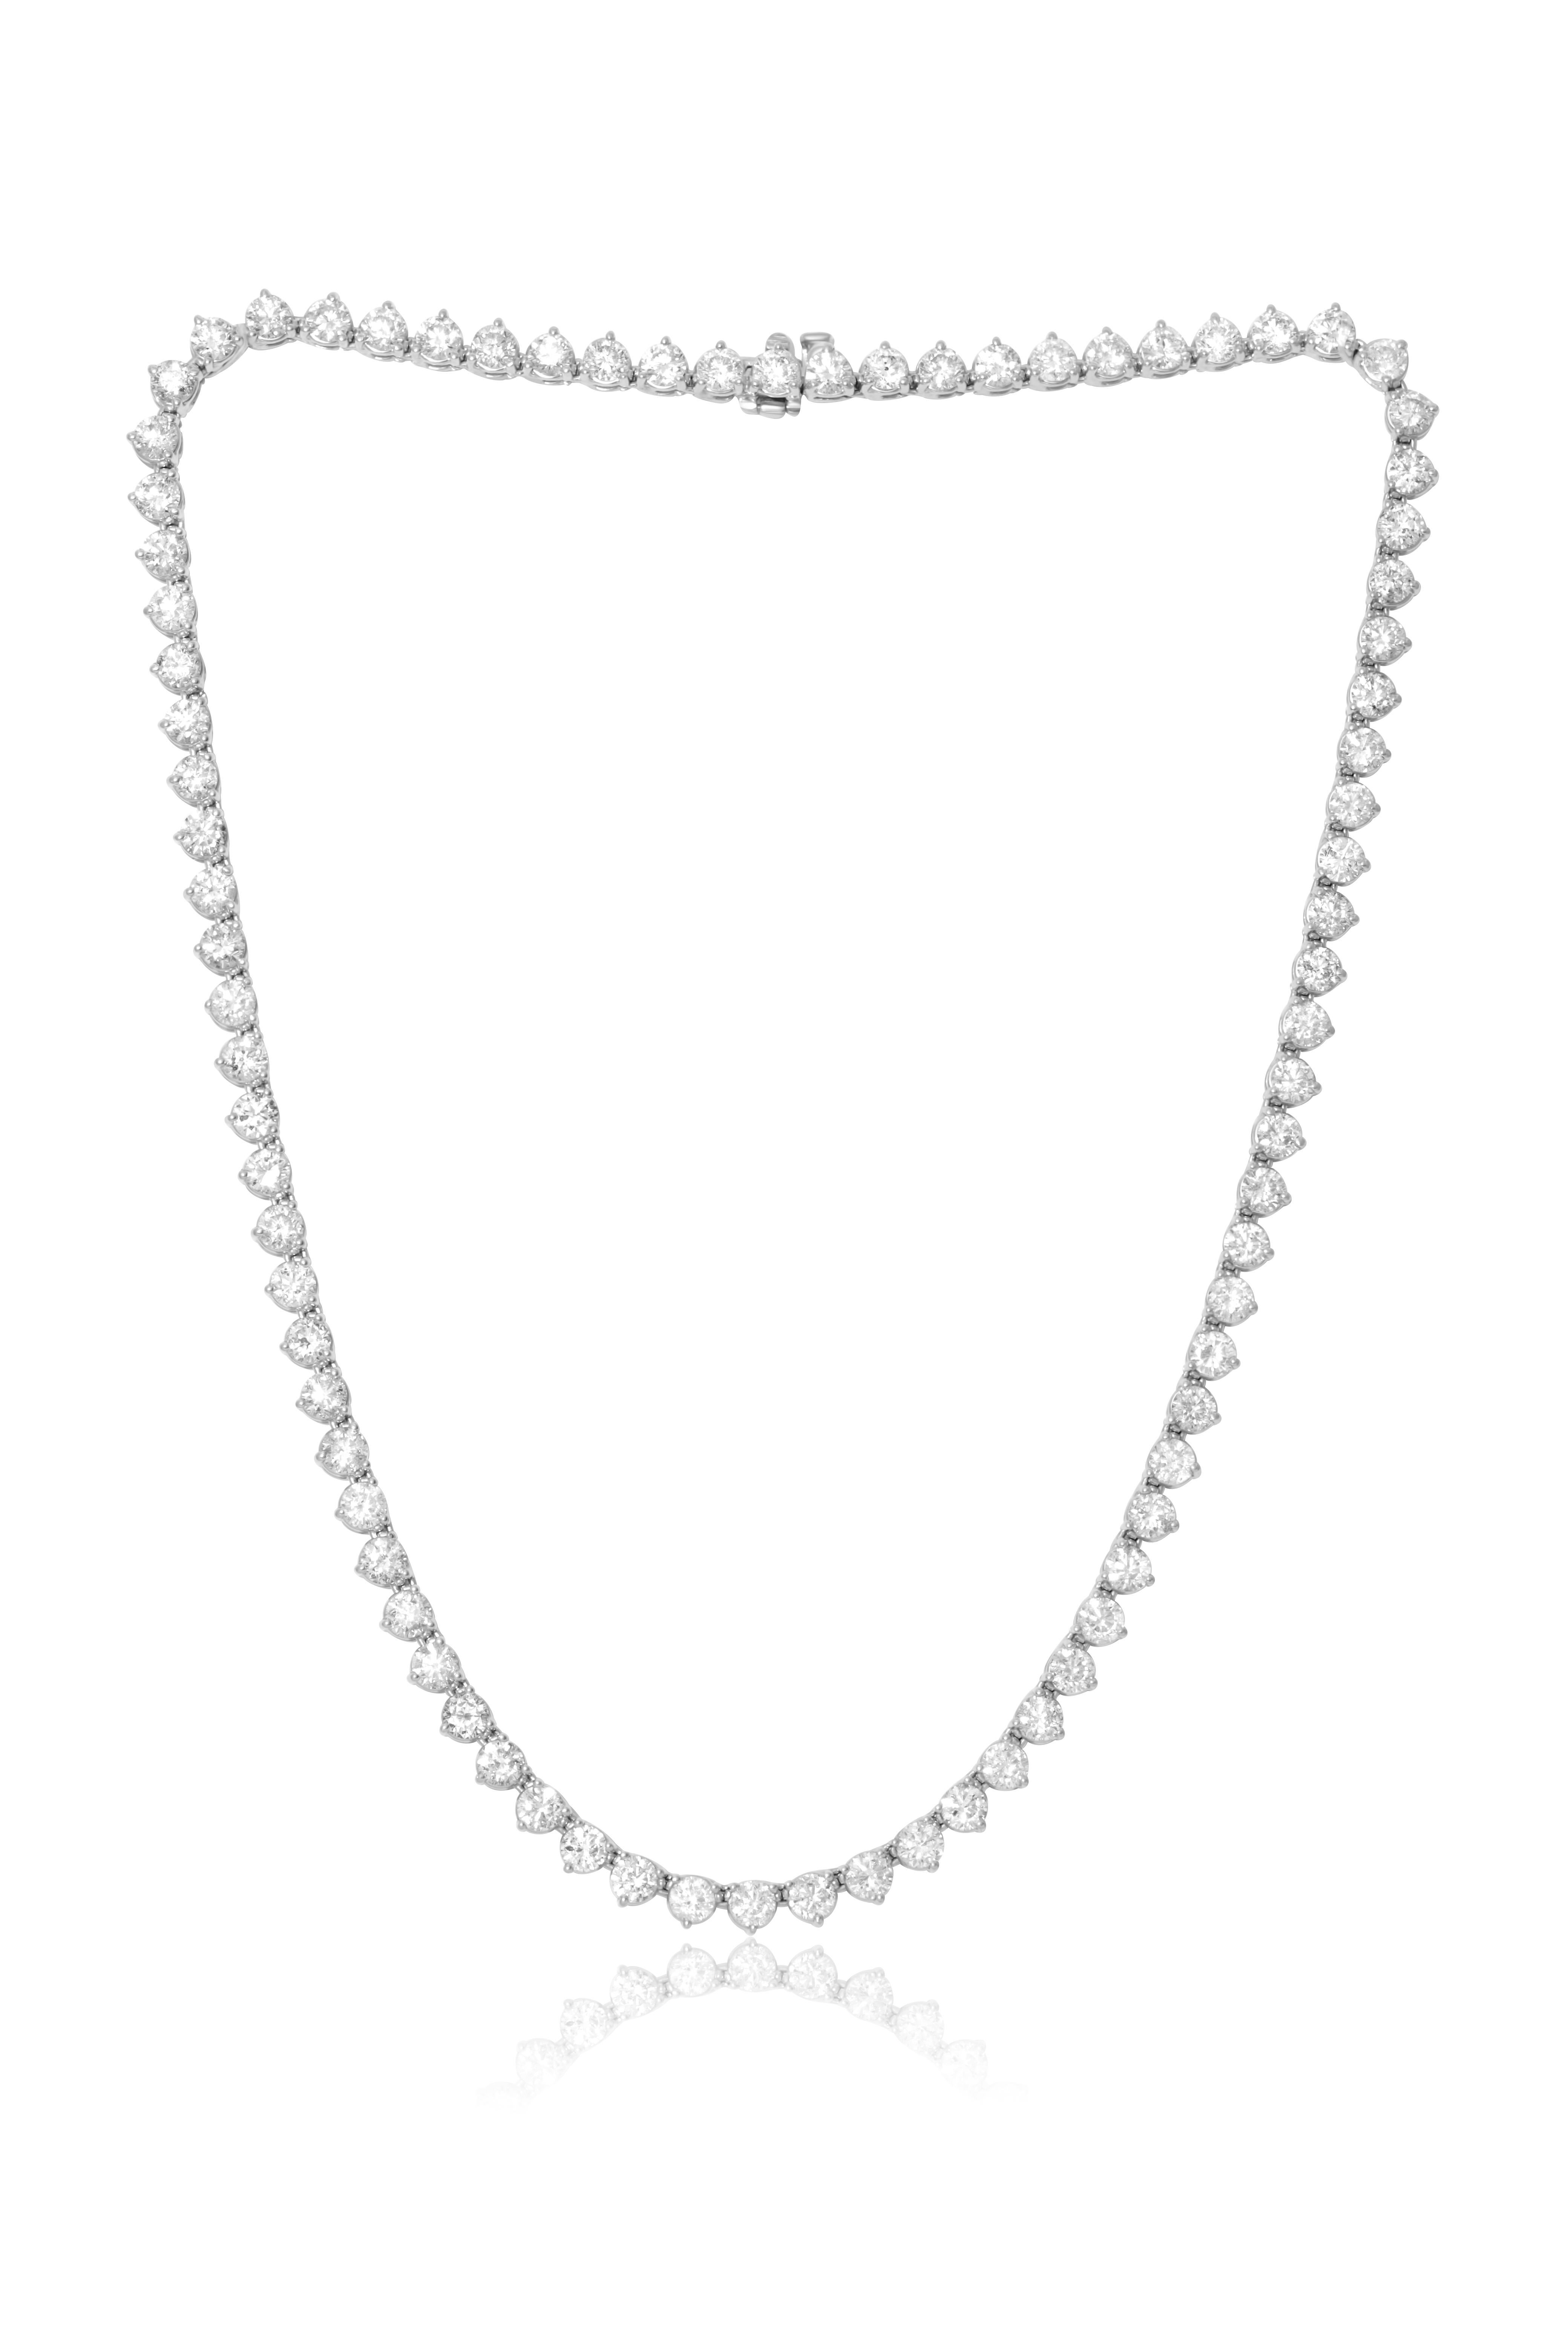 Modern Diana M. Custom 10.00 cts 3 prong diamond 18k white gold tennis necklace 16.5